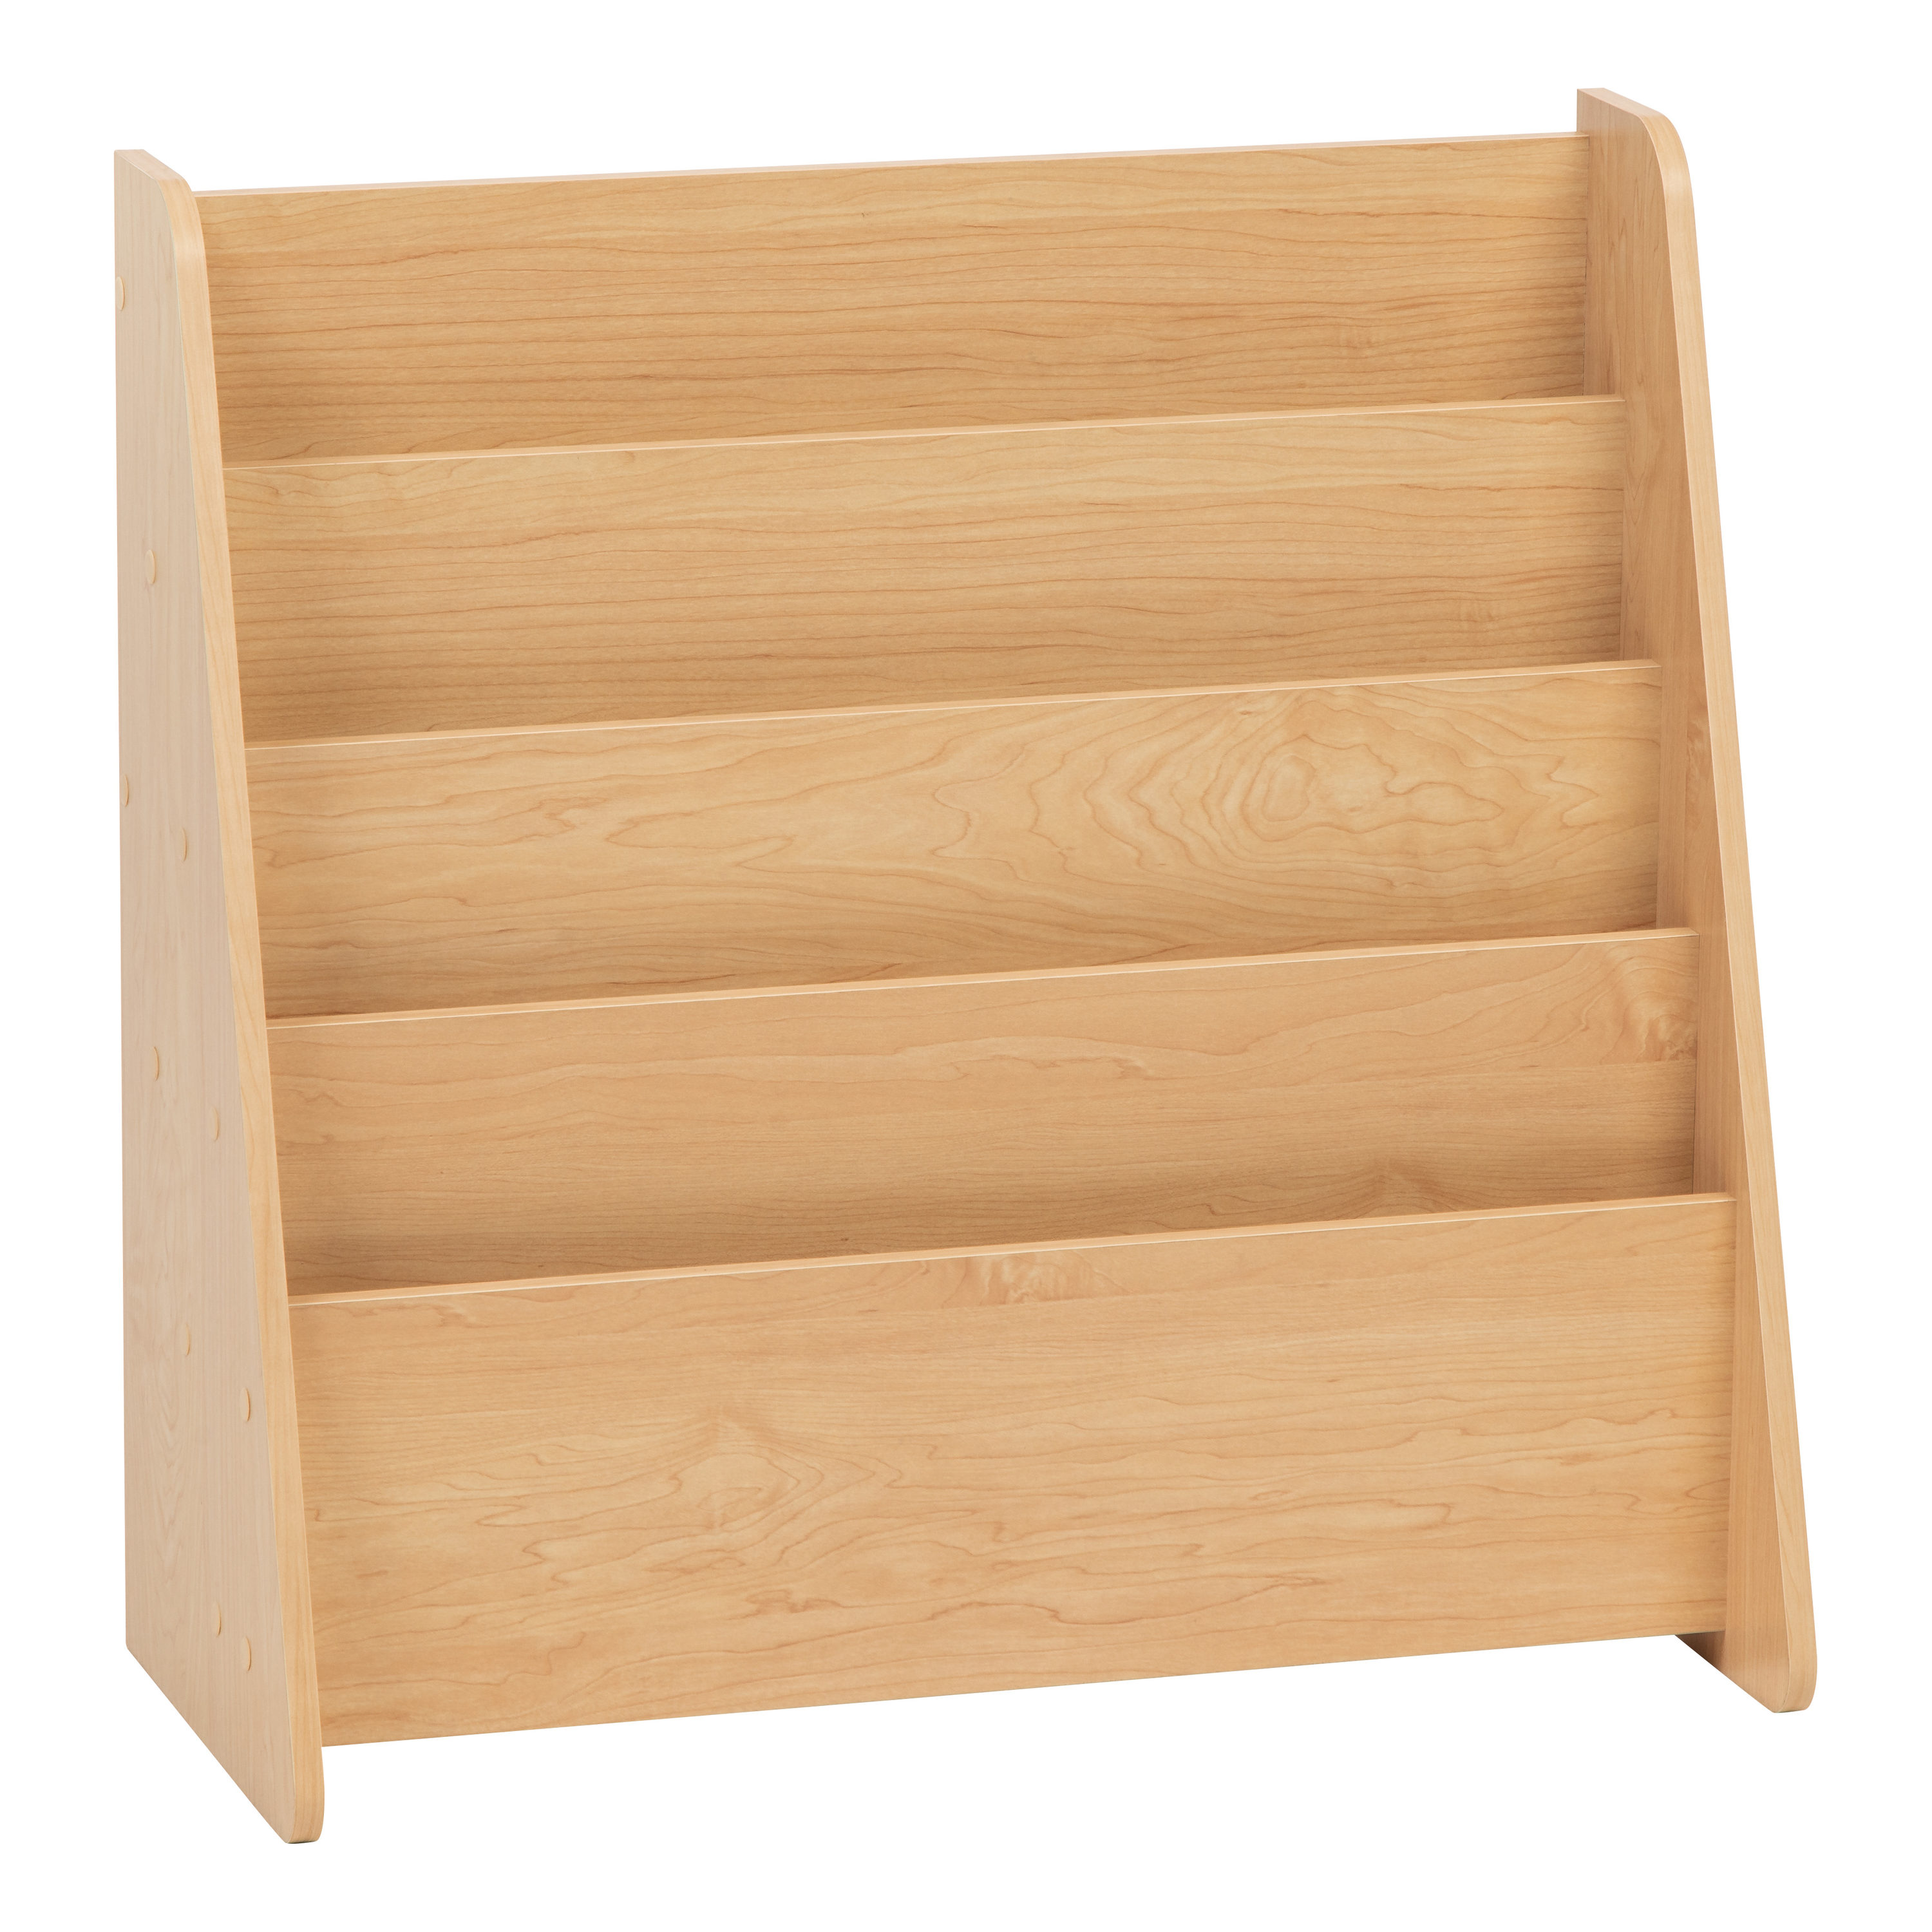  IRIS USA 2-Tier Wood Storage Shelf, Yellow/White